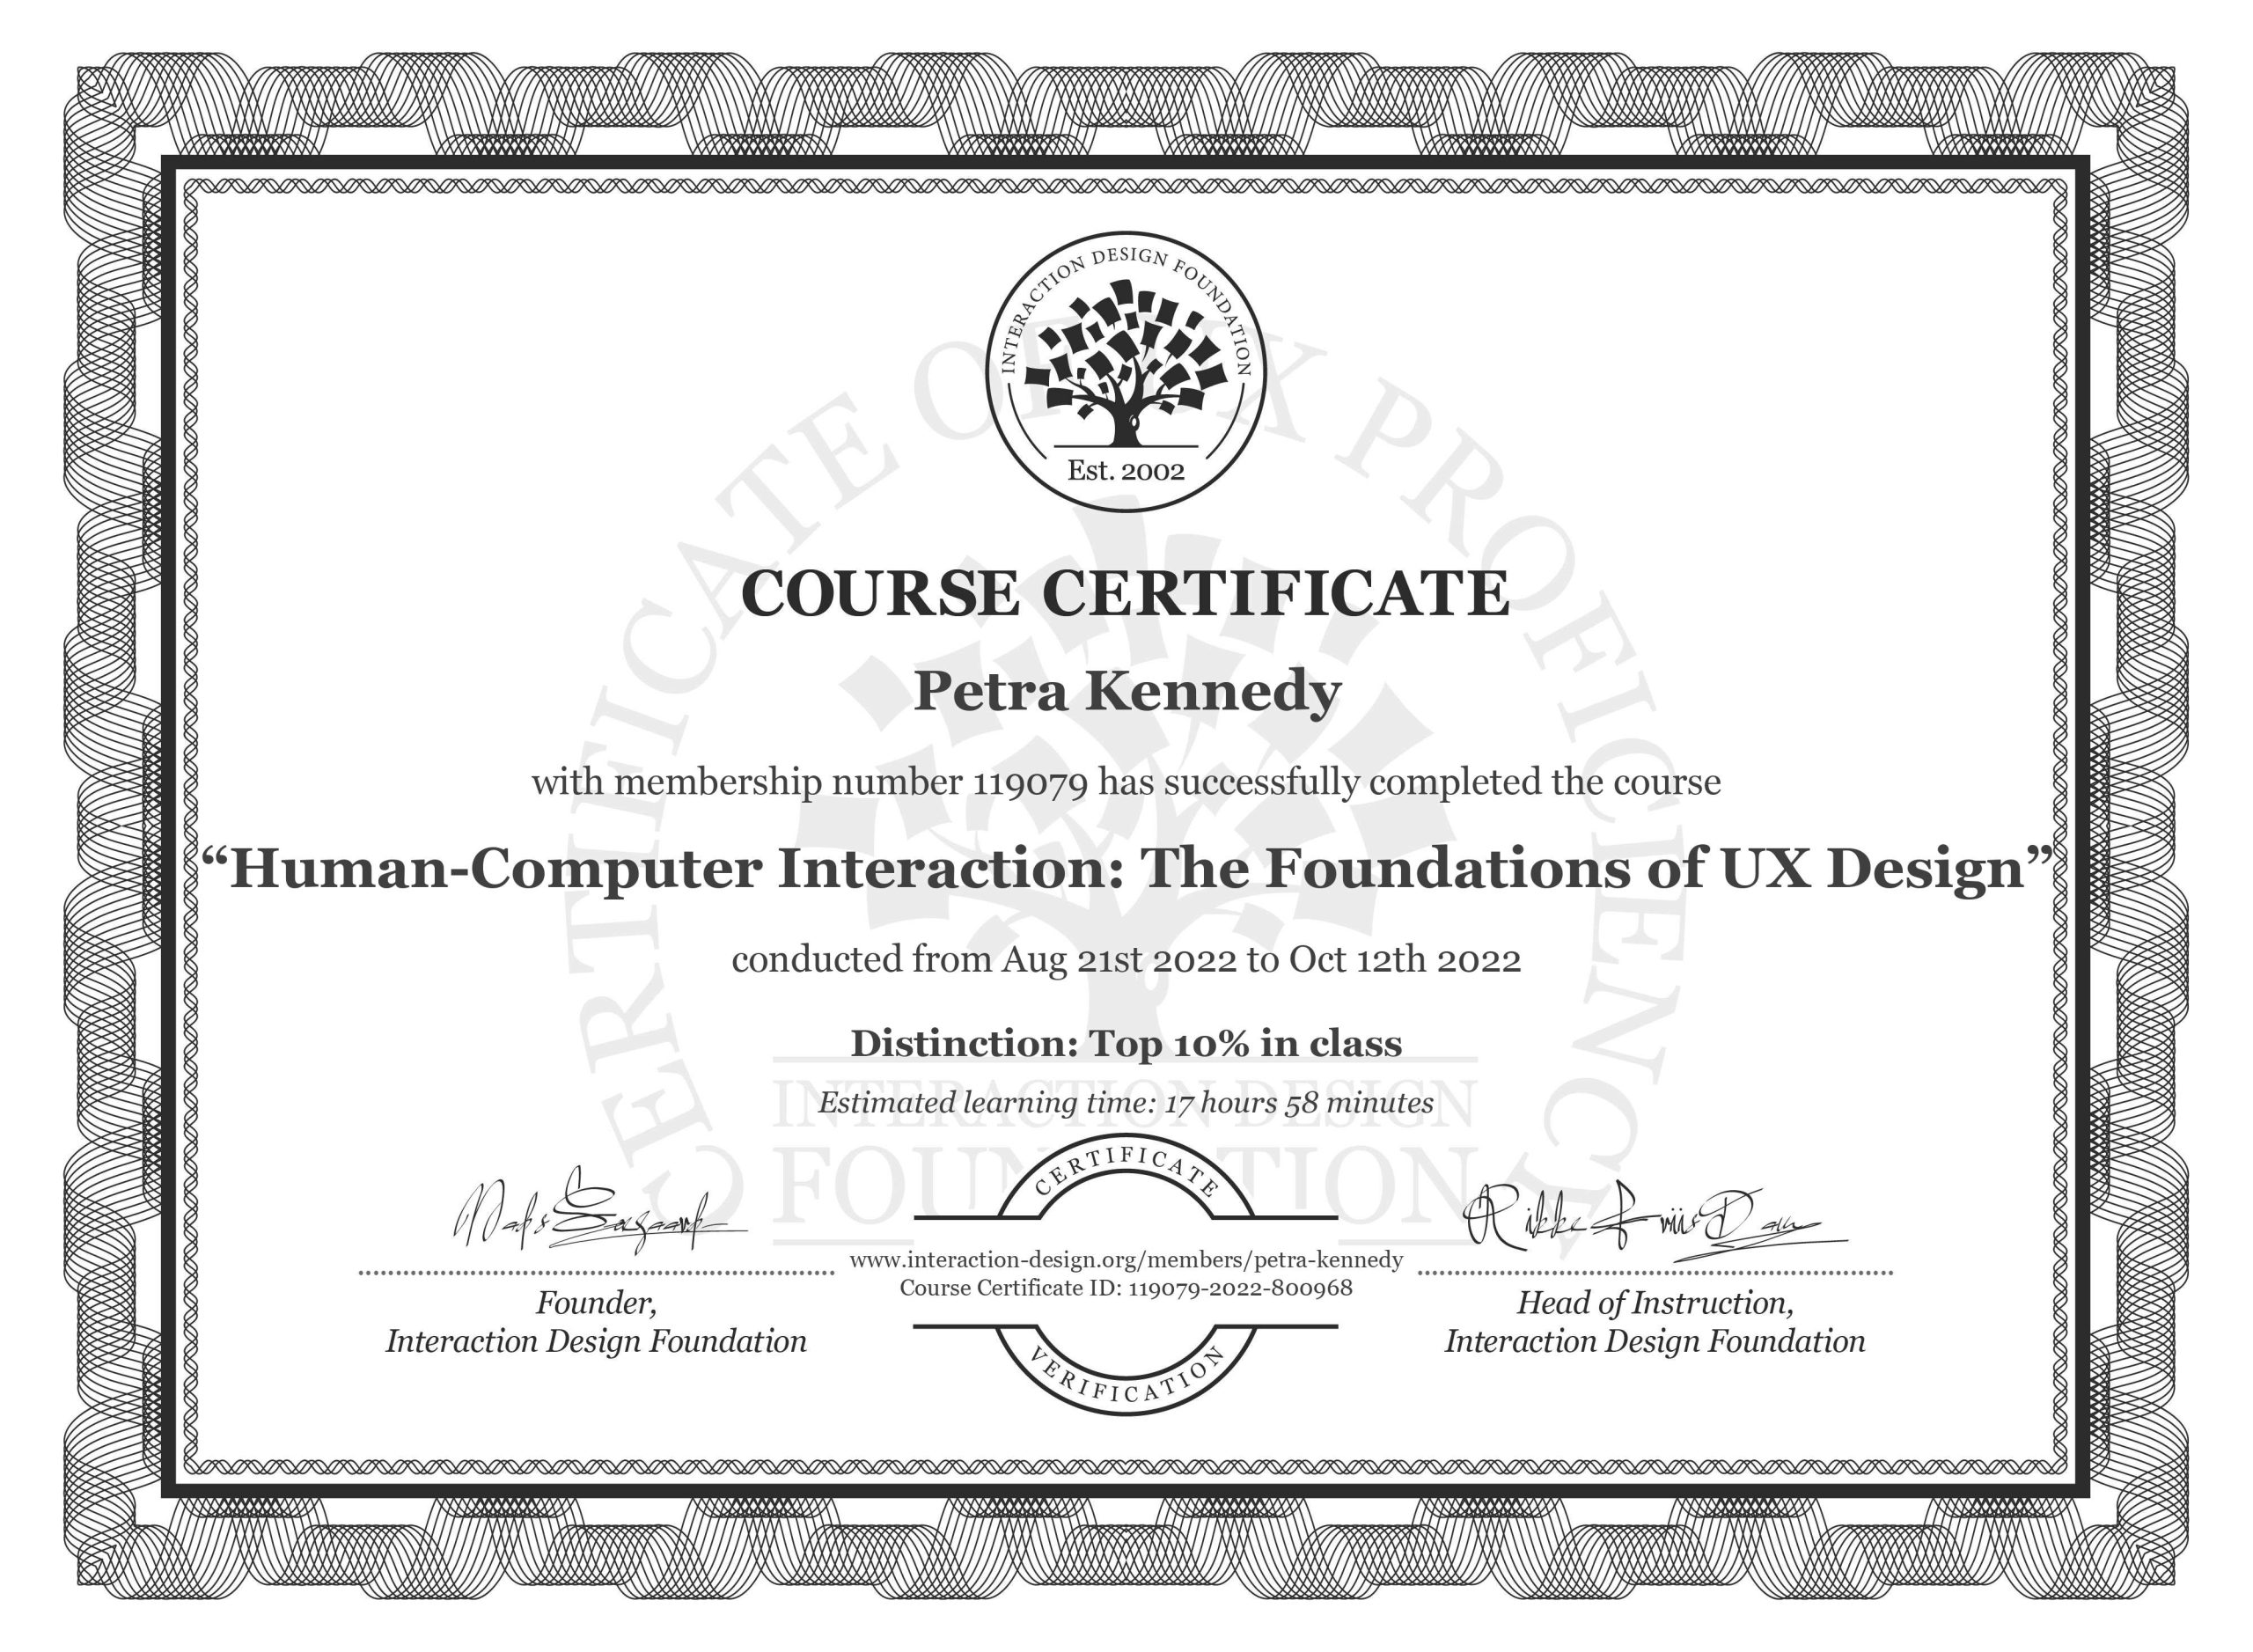 IxDF course certificate HCI: Foundations of UX design 